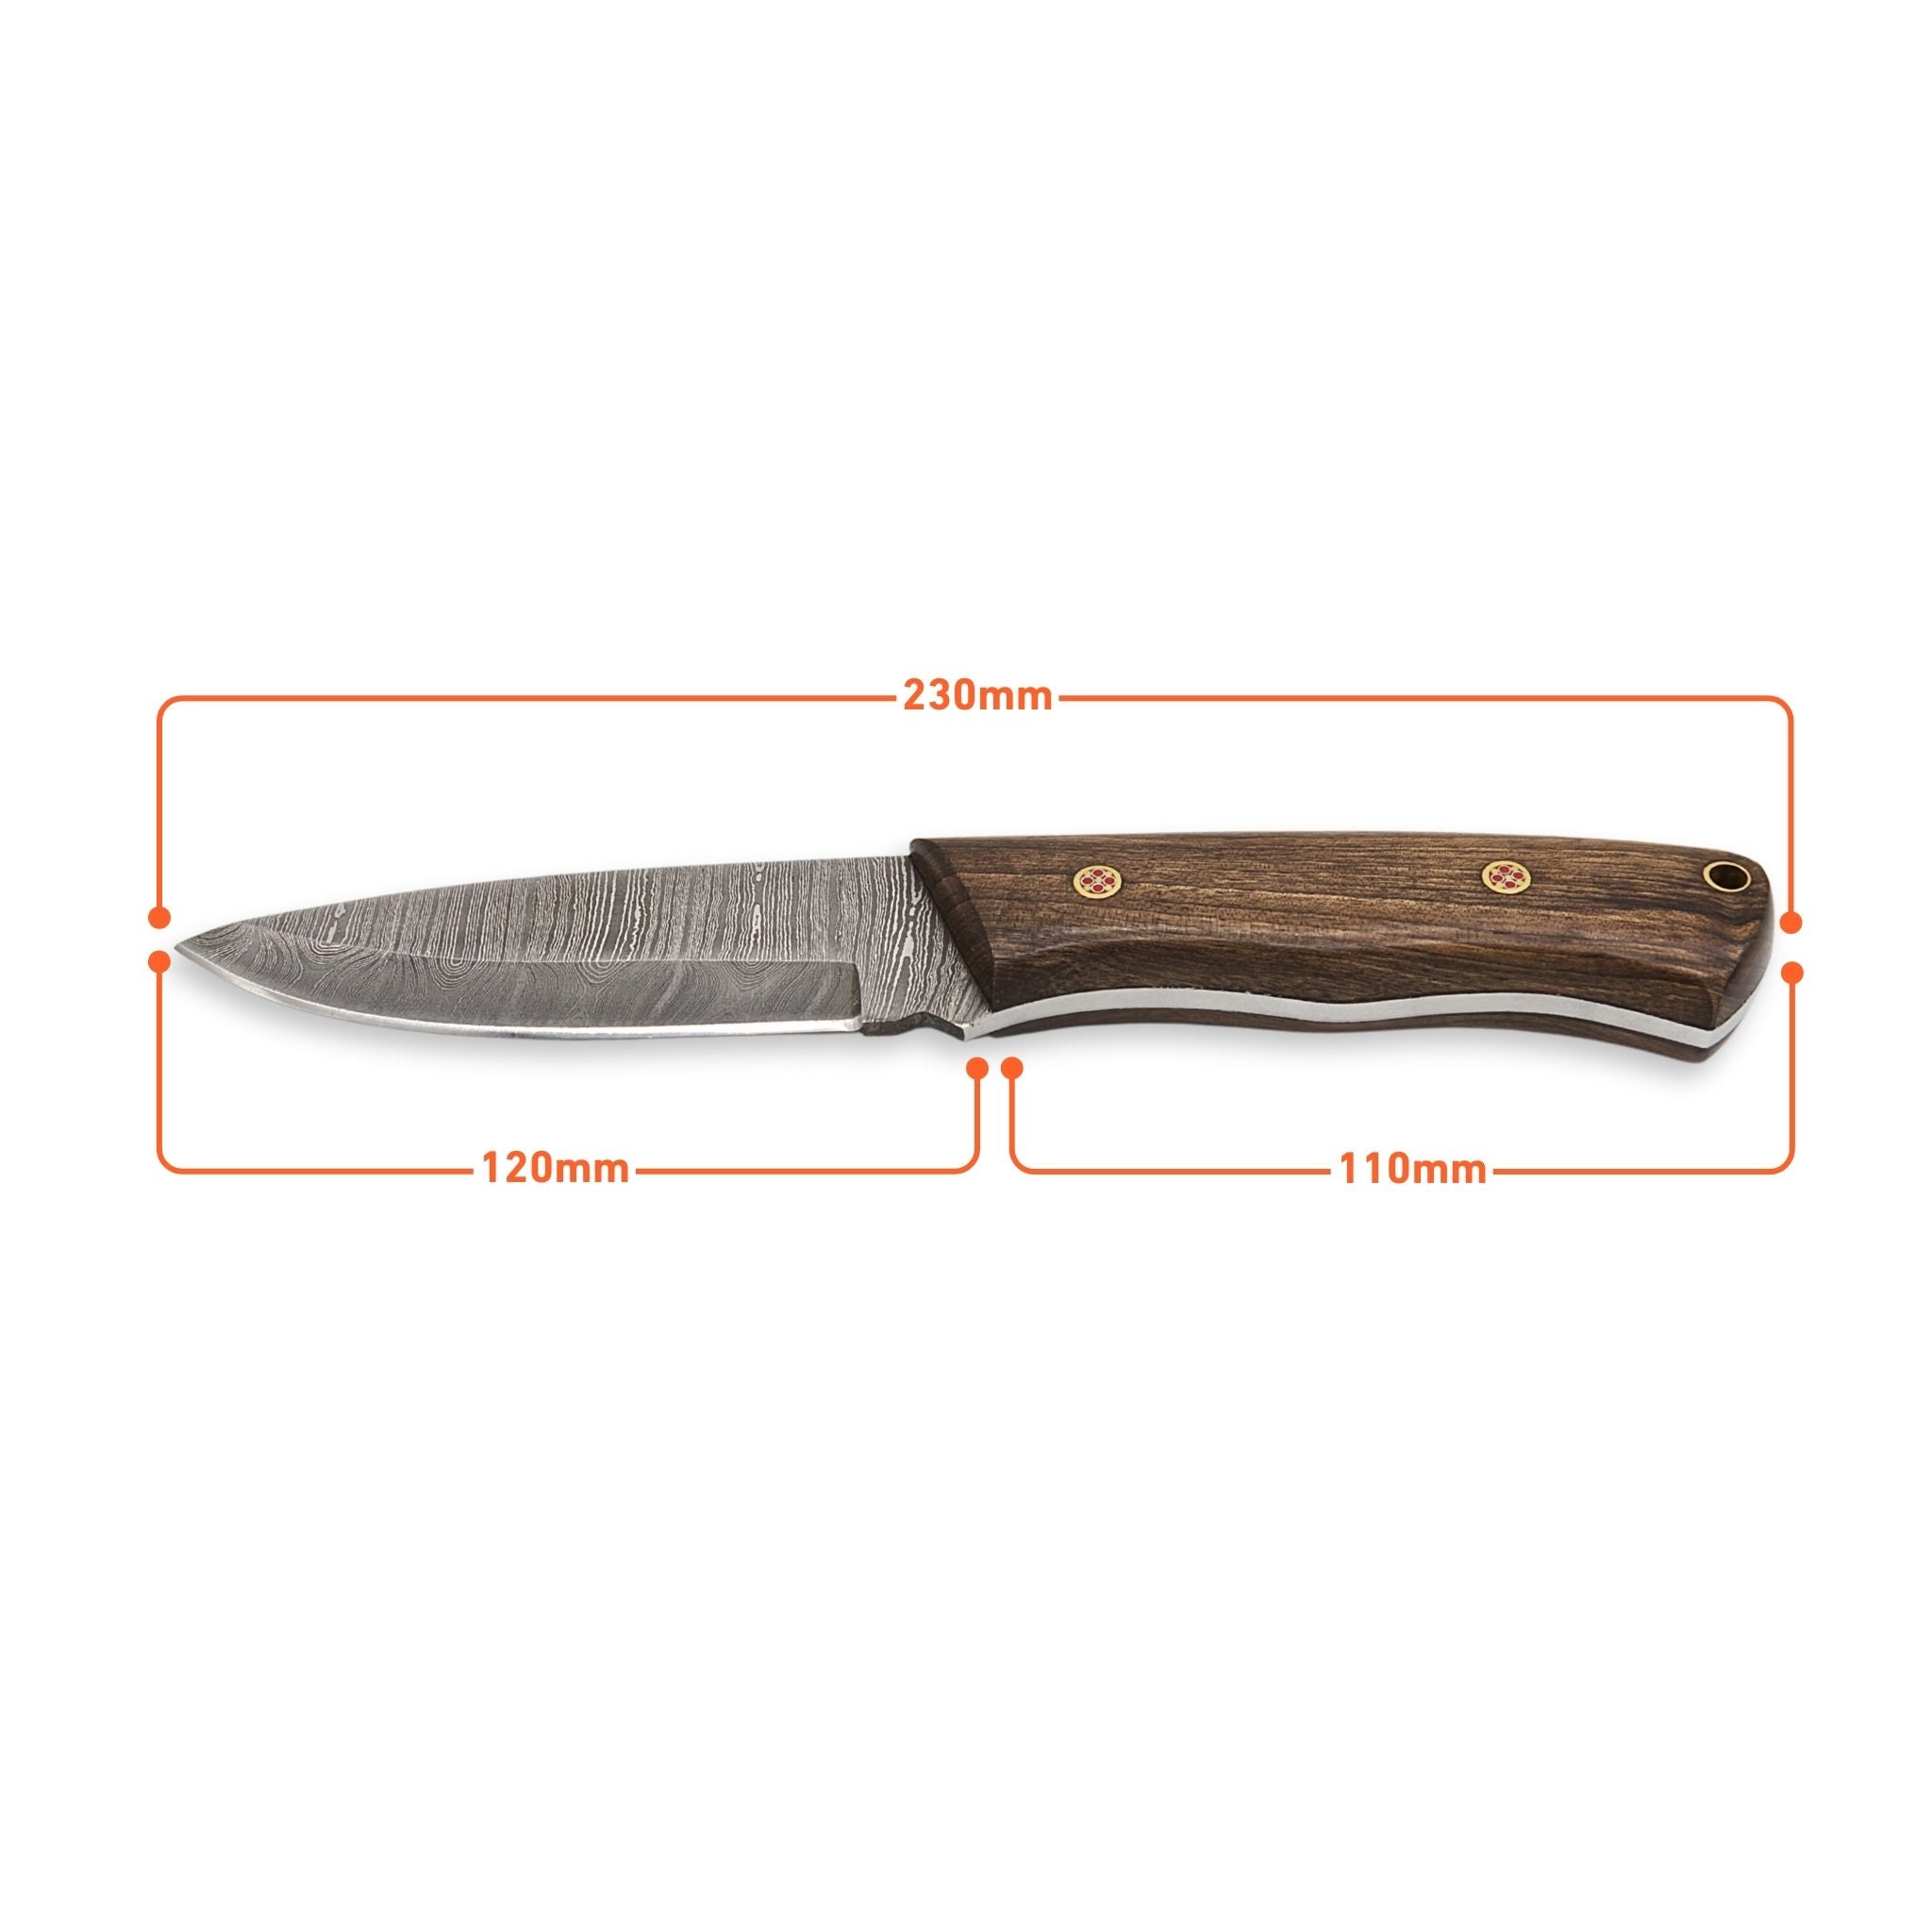 Outback Nomad III, Handmade Knife